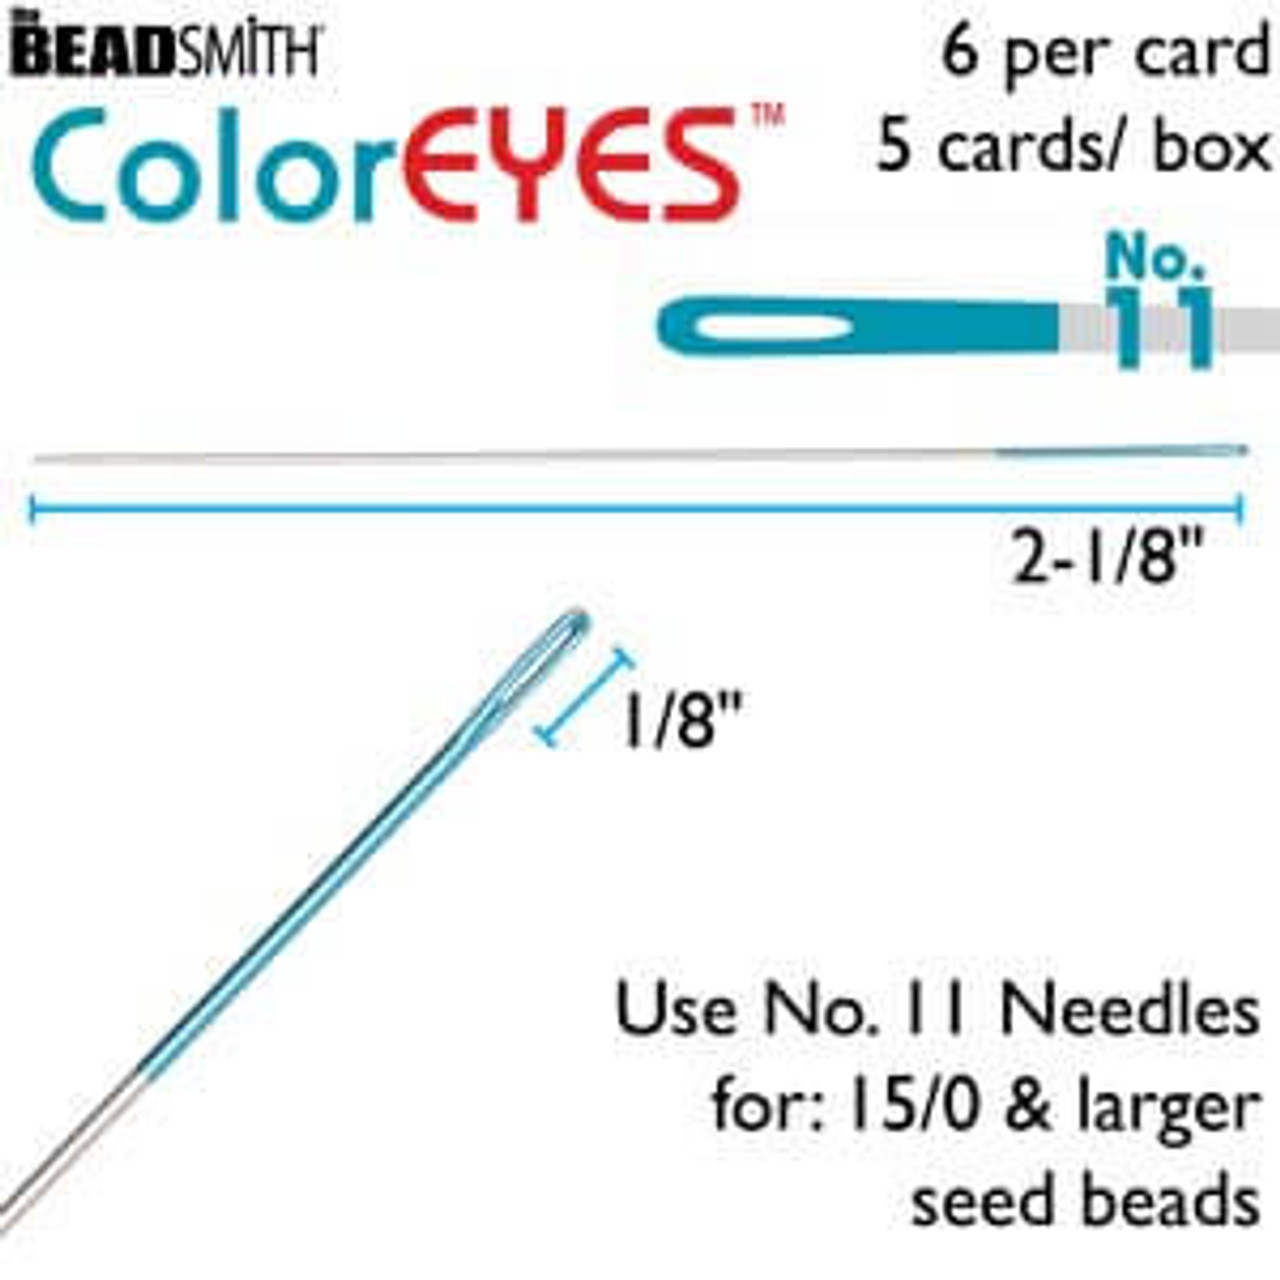 BeadSmith Big Eye Beading Needles (6 Pack) – The Bead Merchant